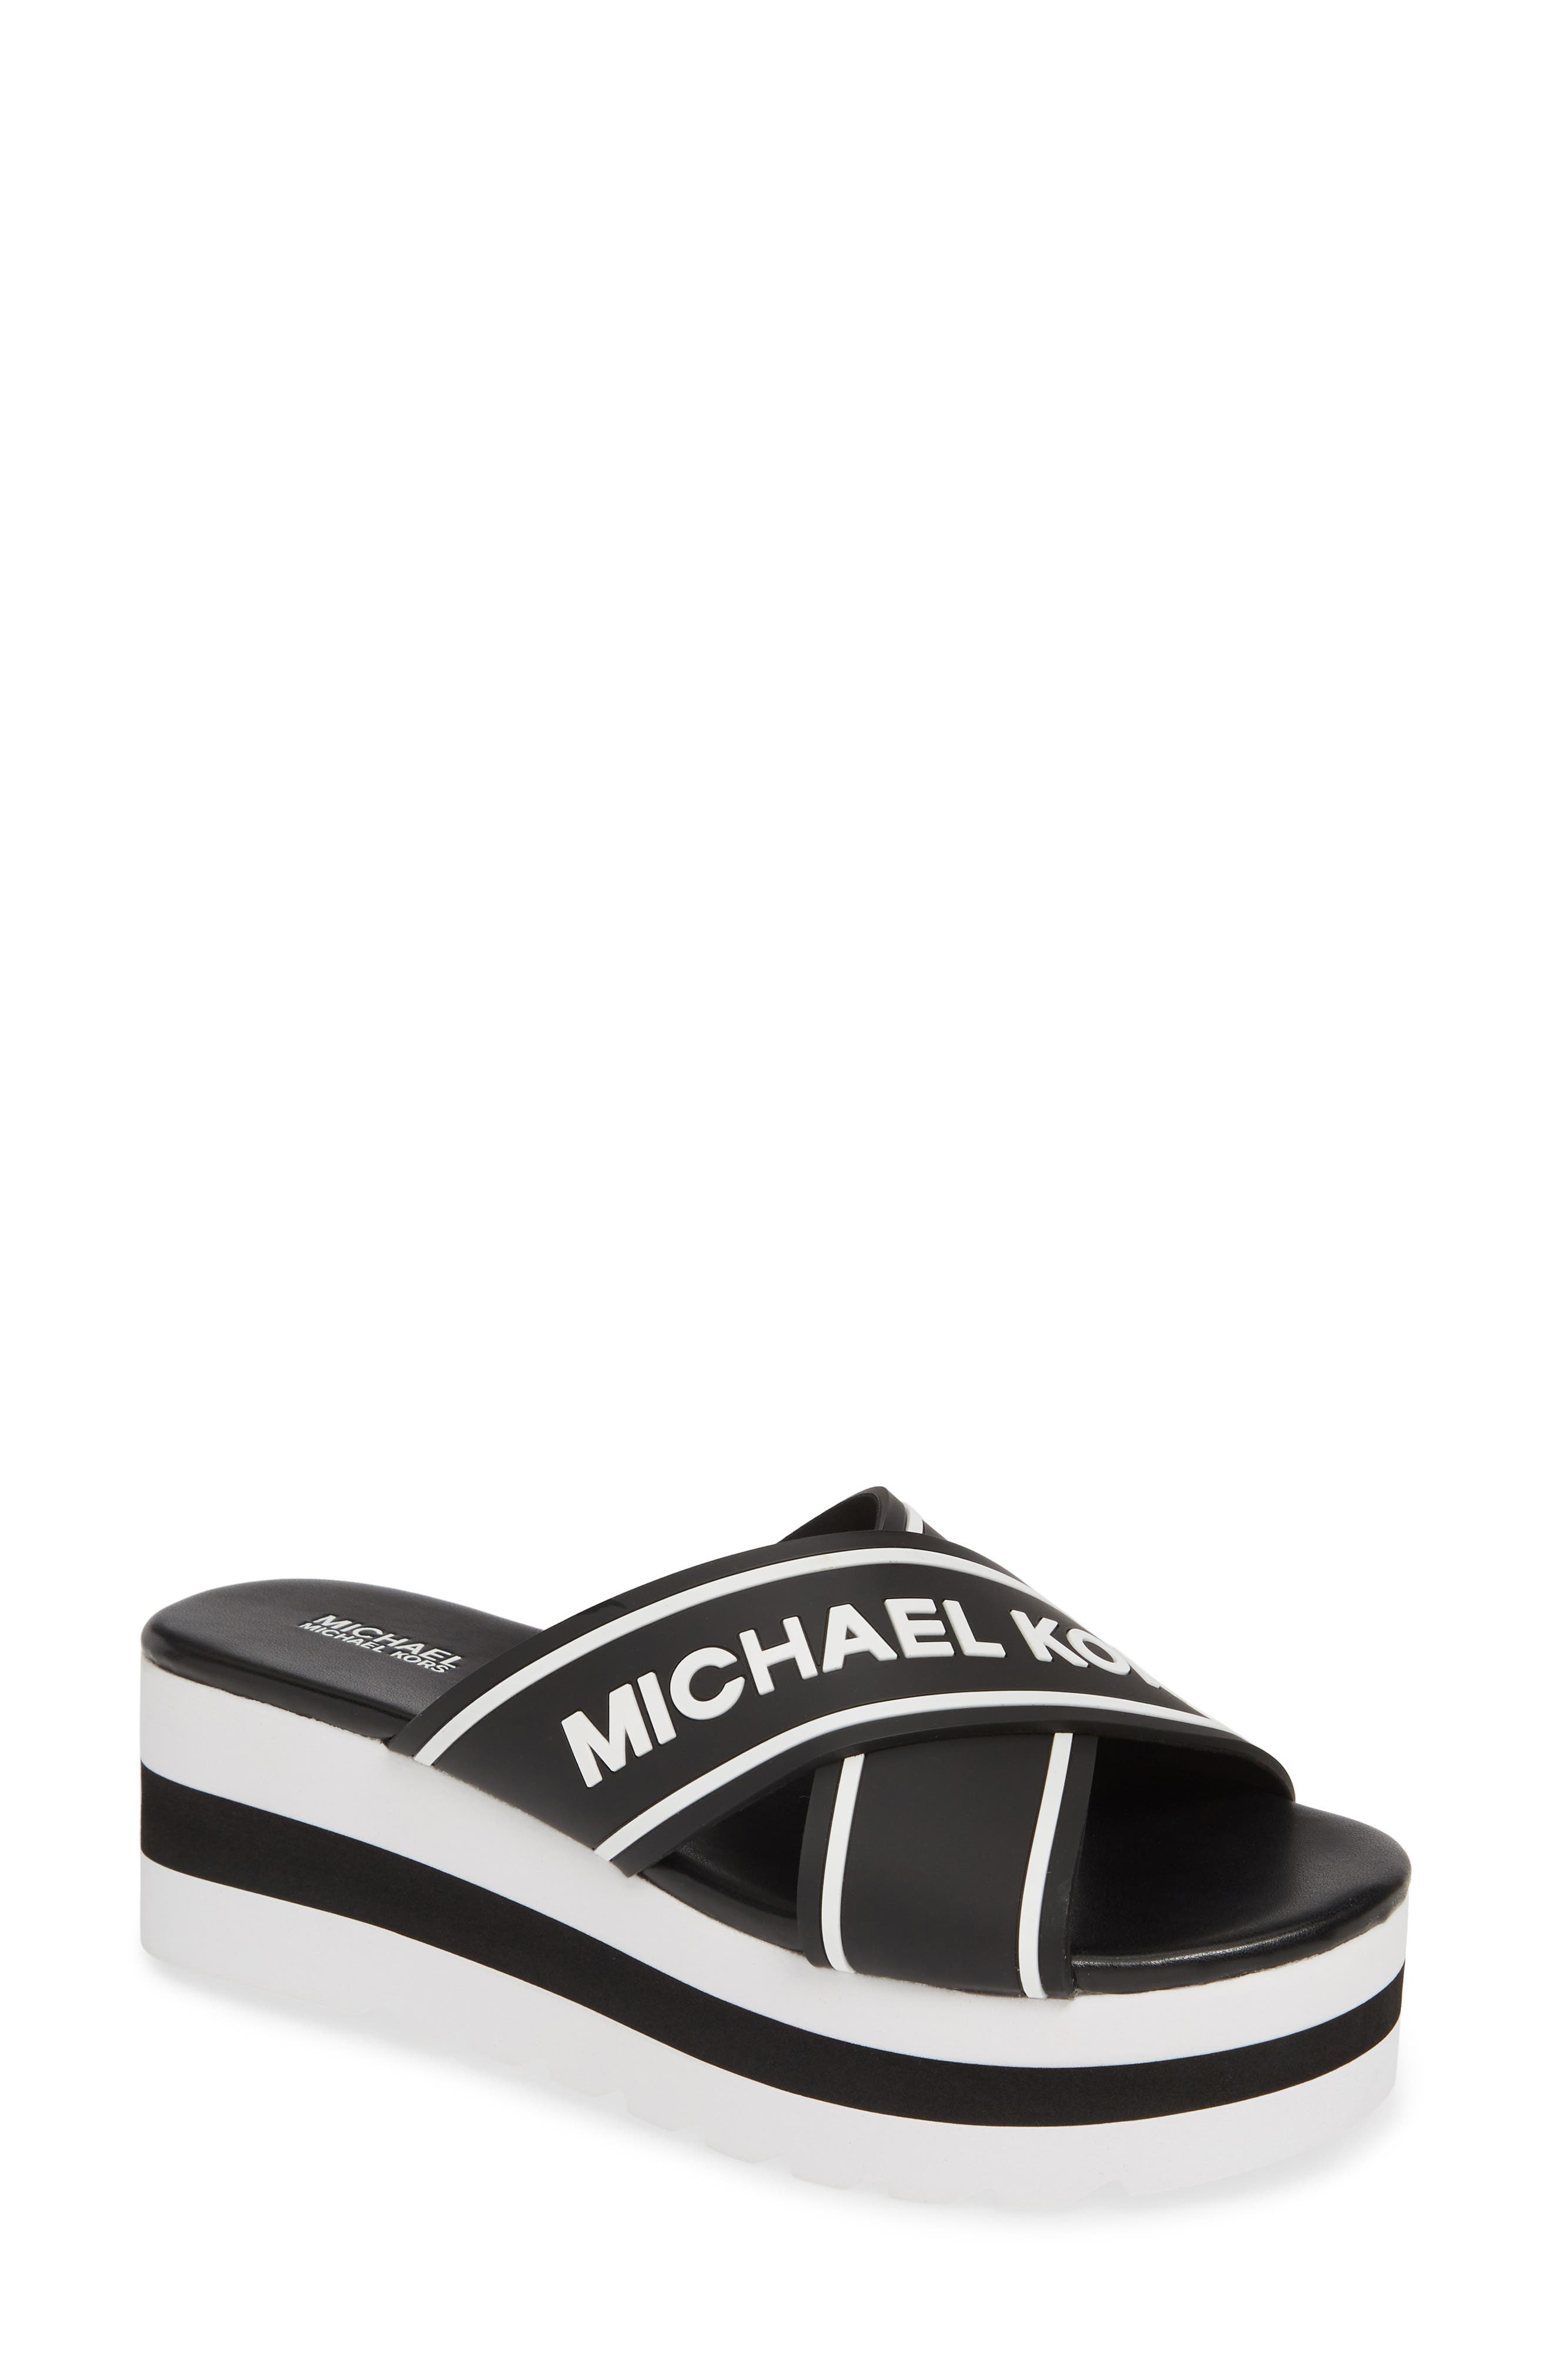 michael kors black and white sandals